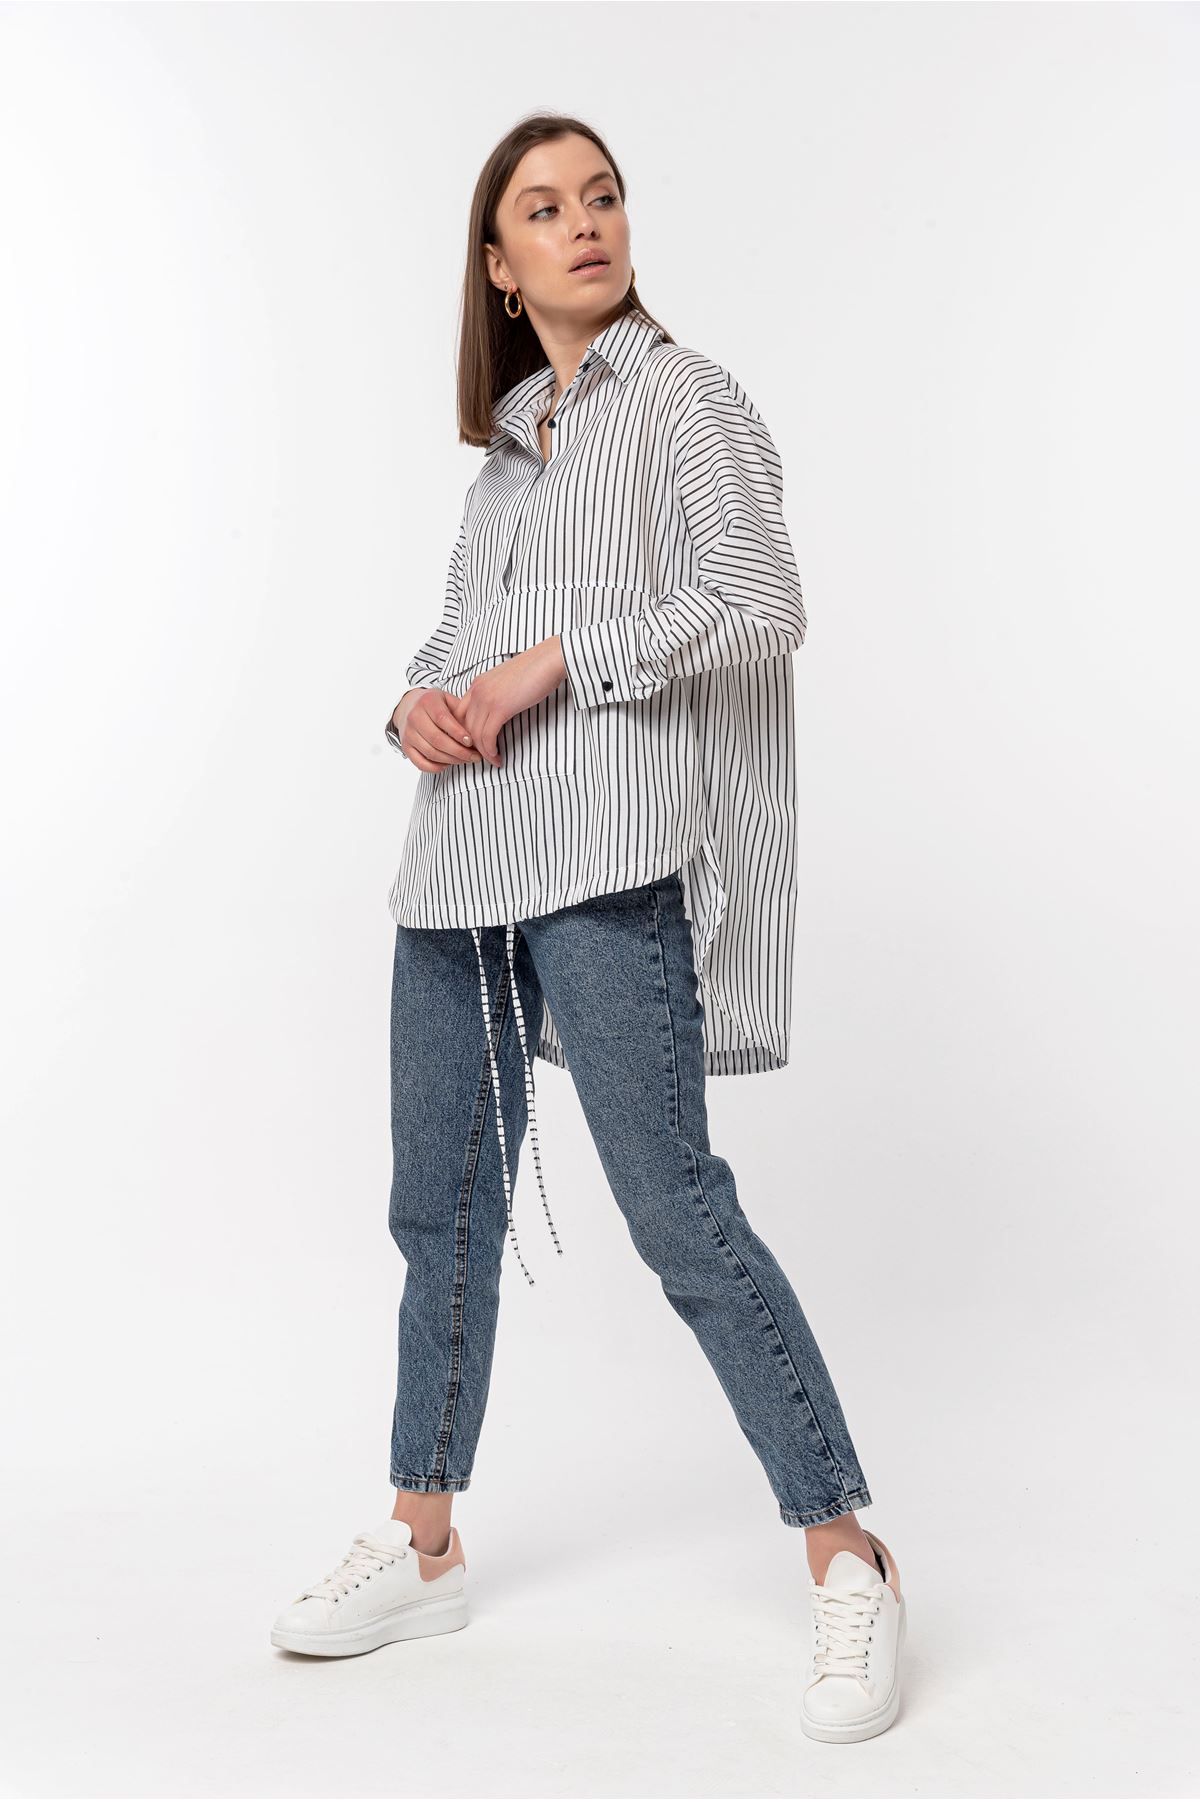 Satin Fabric Long Sleeve Oversize Striped Women'S Shirt - Black